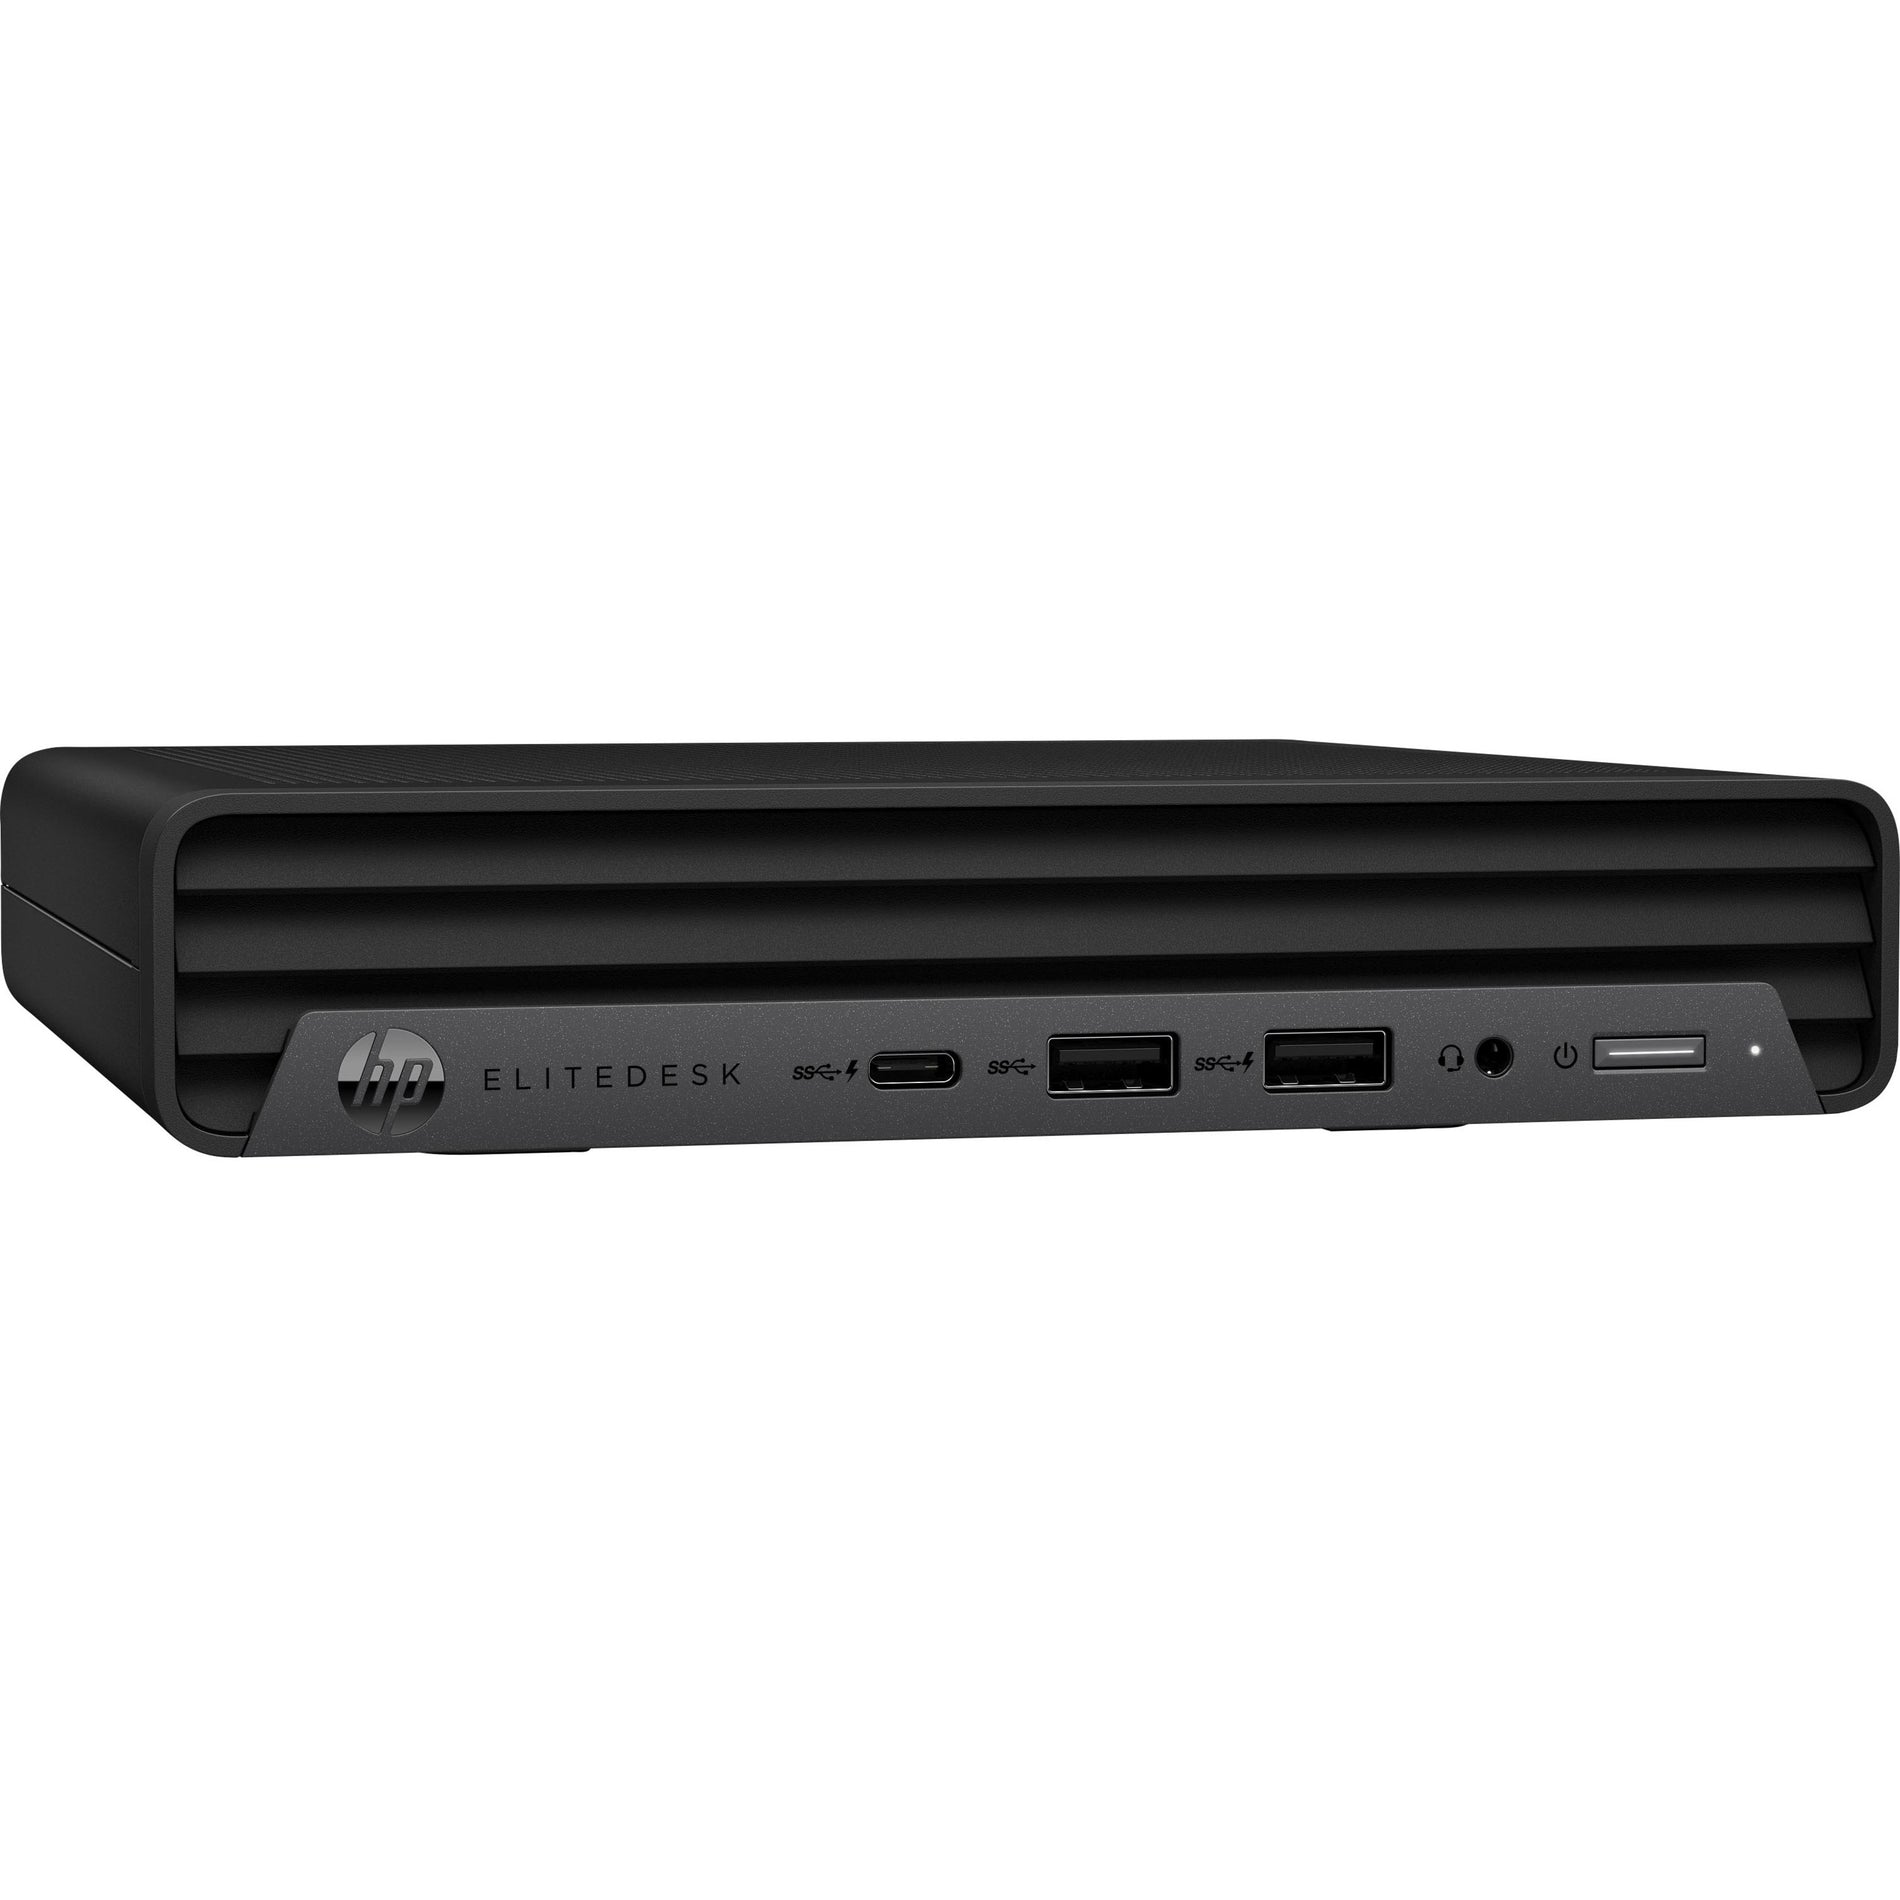 HP EliteDesk 800 G6 Desktop Mini PC, 64GB Memory, 7 USB Ports, DisplayPort Outputs